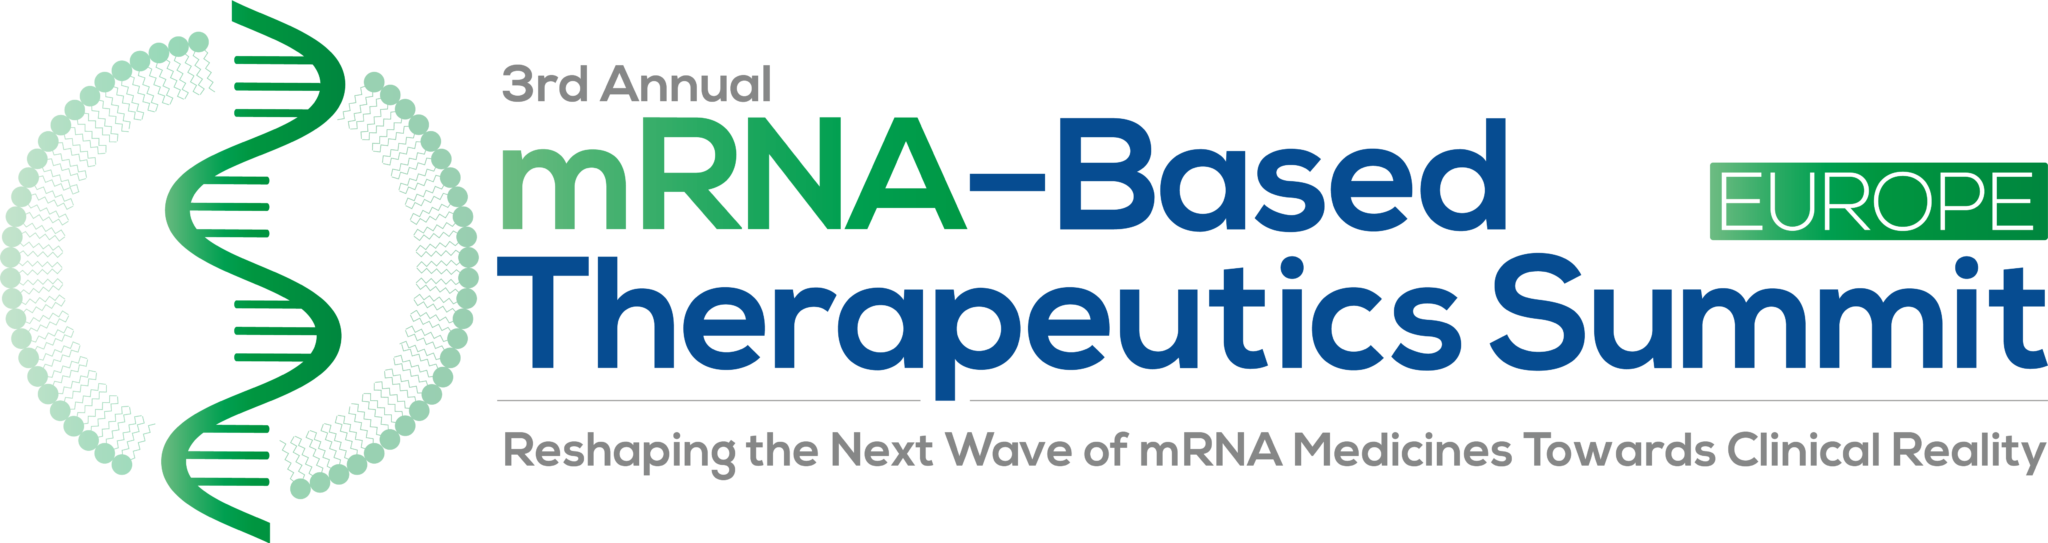 3rd mRNA-Based Therapeutics Summit Europe